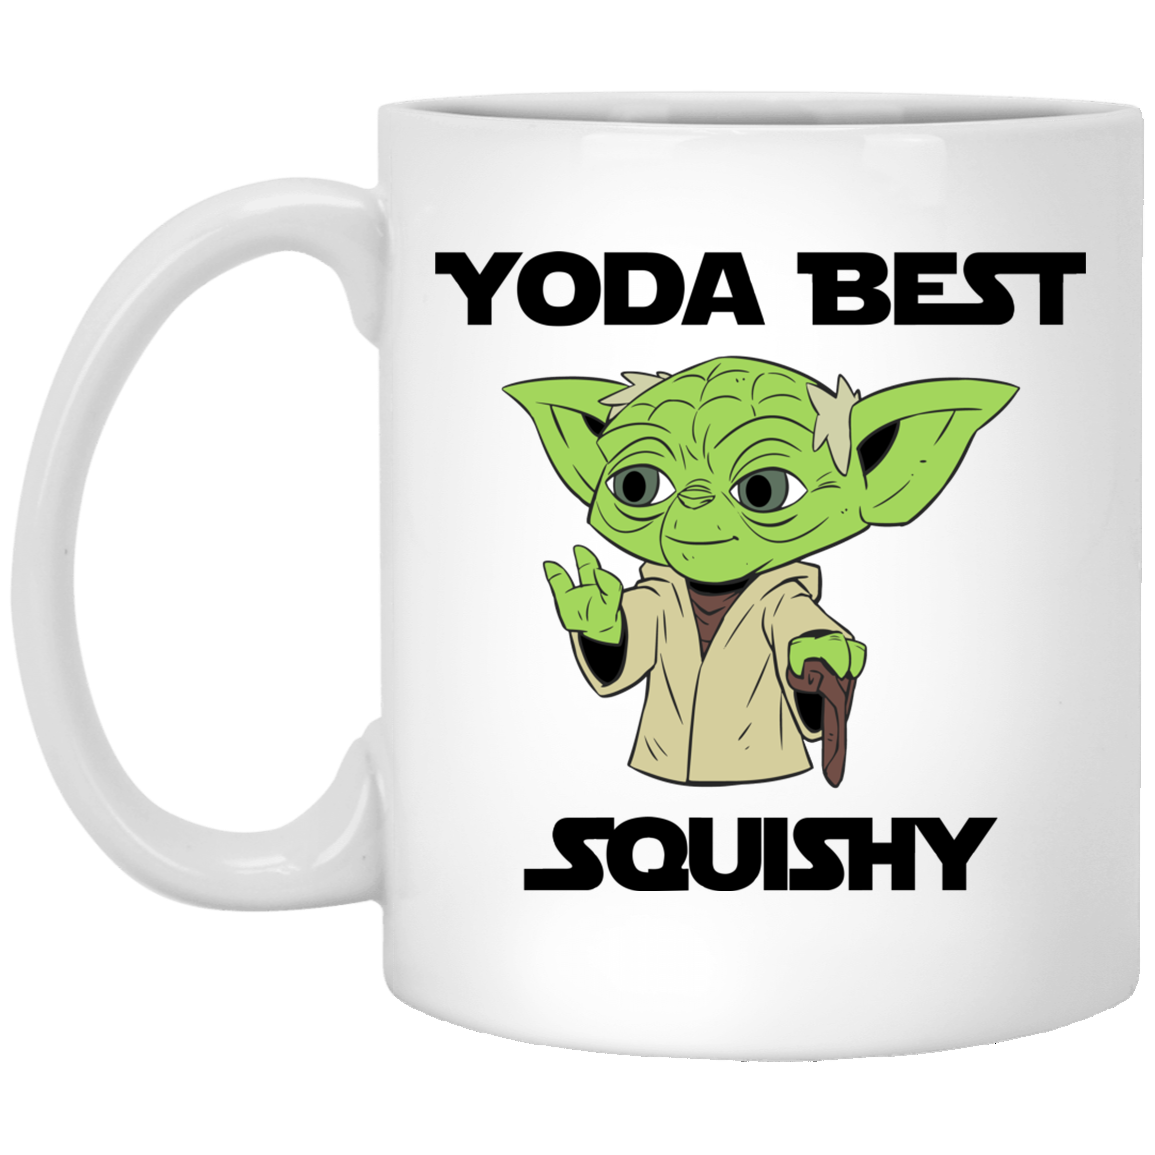 Yoda Best squishyMug